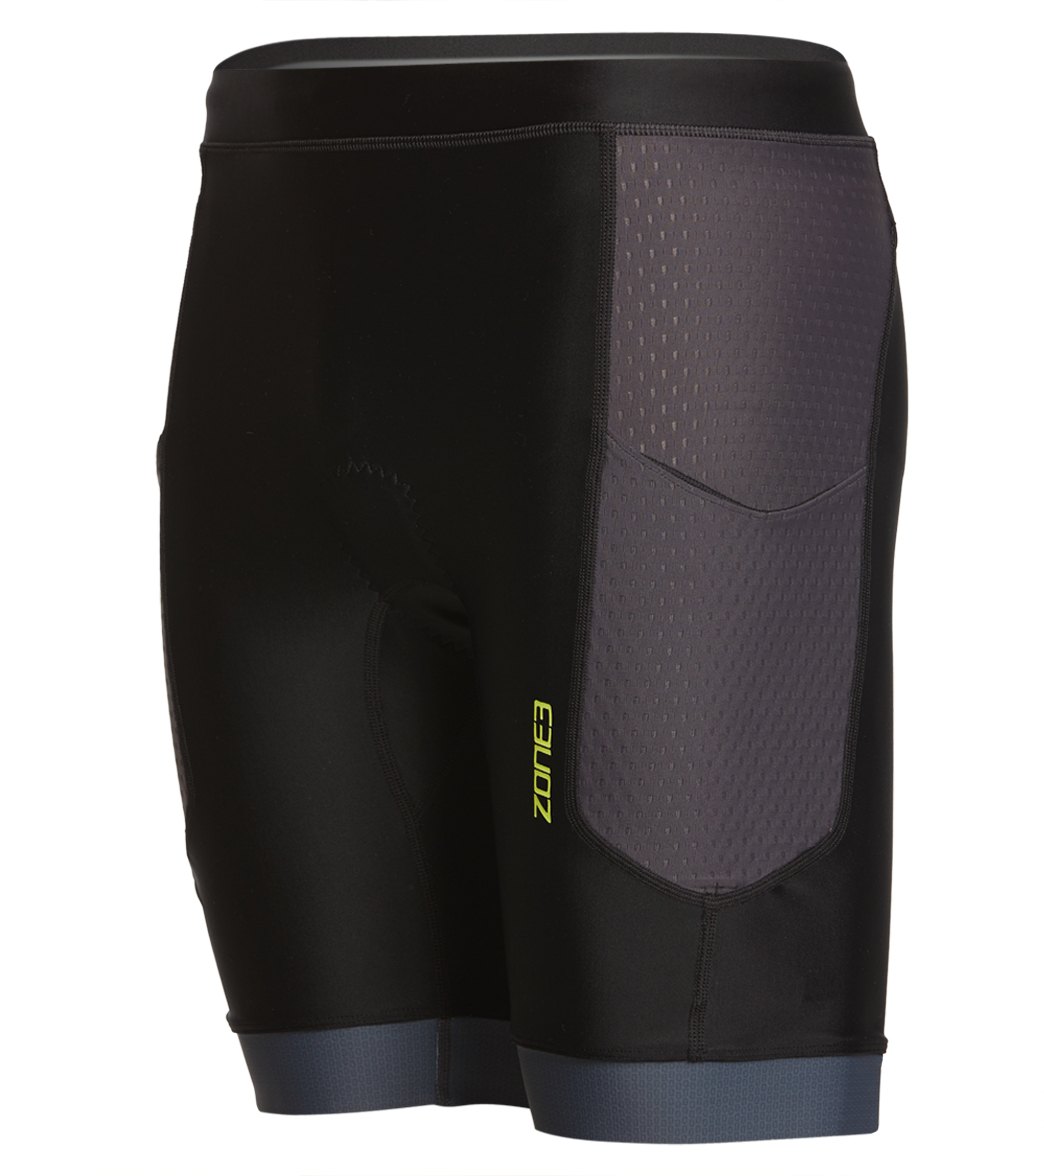 Zone3 Men's Aquaflo Plus Tri Shorts - Black/Grey/Neon Green Large - Swimoutlet.com